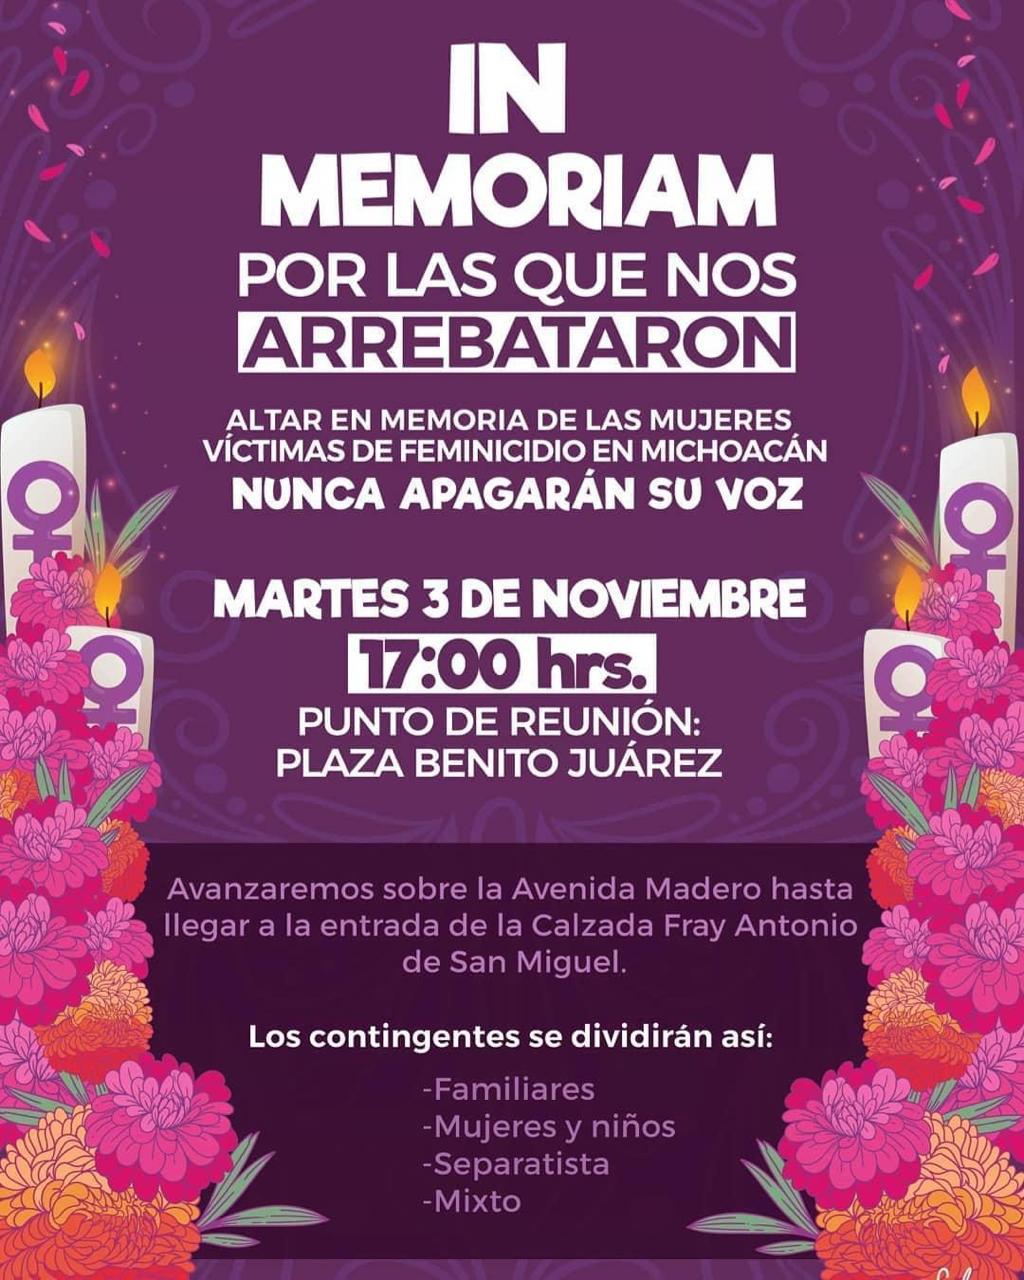 Marcharán en memoria de víctimas de feminicidio (Michoacán)